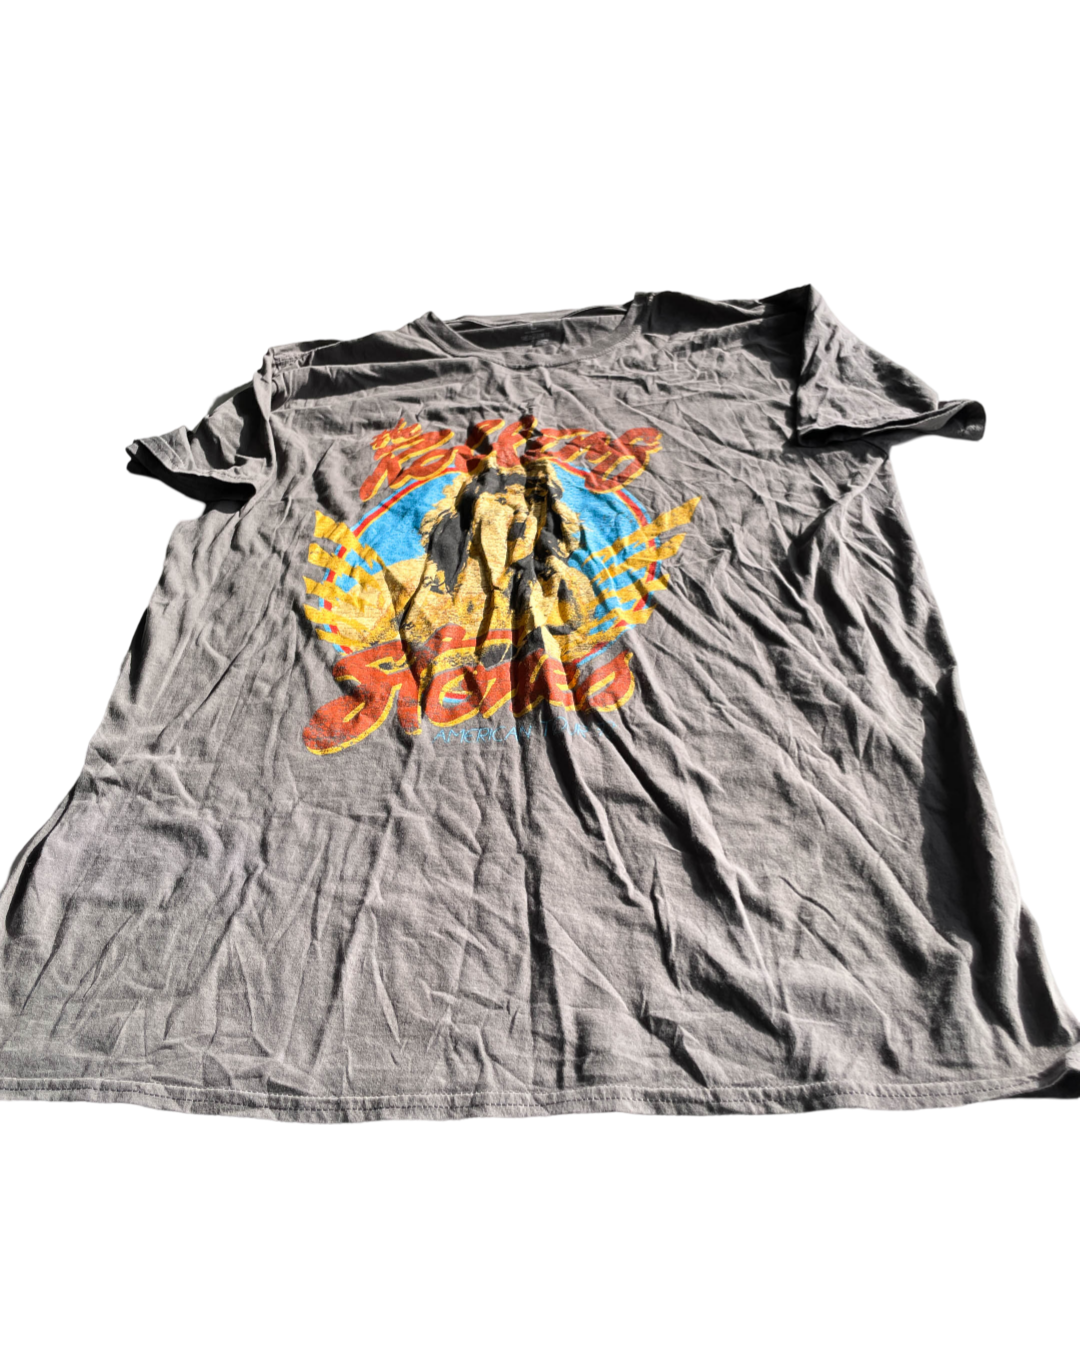 Vintage Rolling Stones Tour  grey T-Shirt in size L   L 31  W 23 |SKU 5062